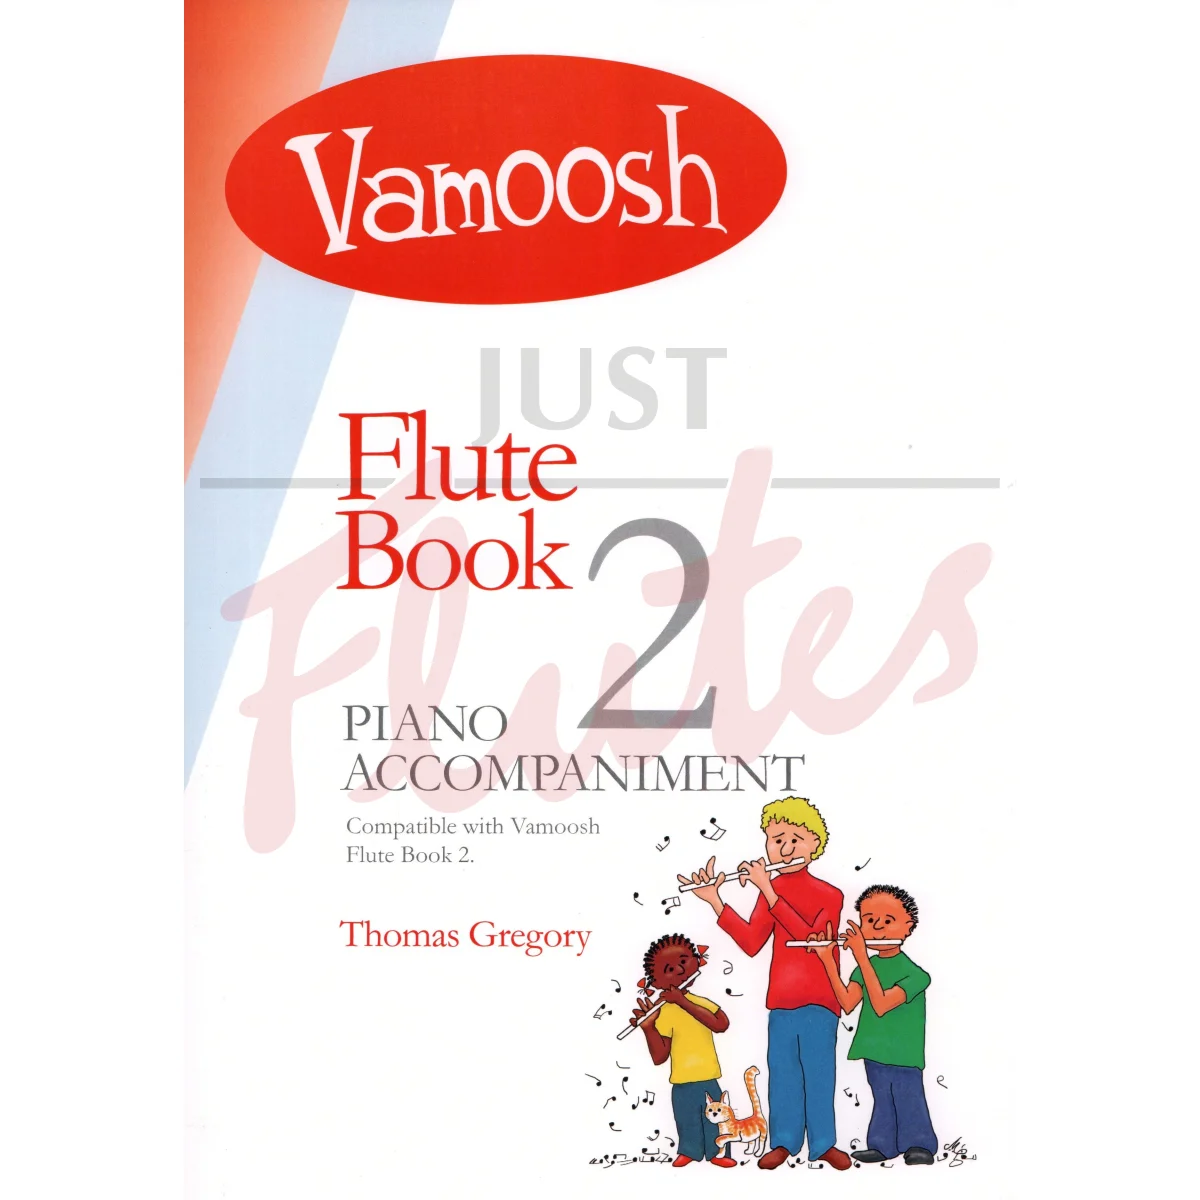 Vamoosh Flute Book 2 [Piano Accompaniment Book]